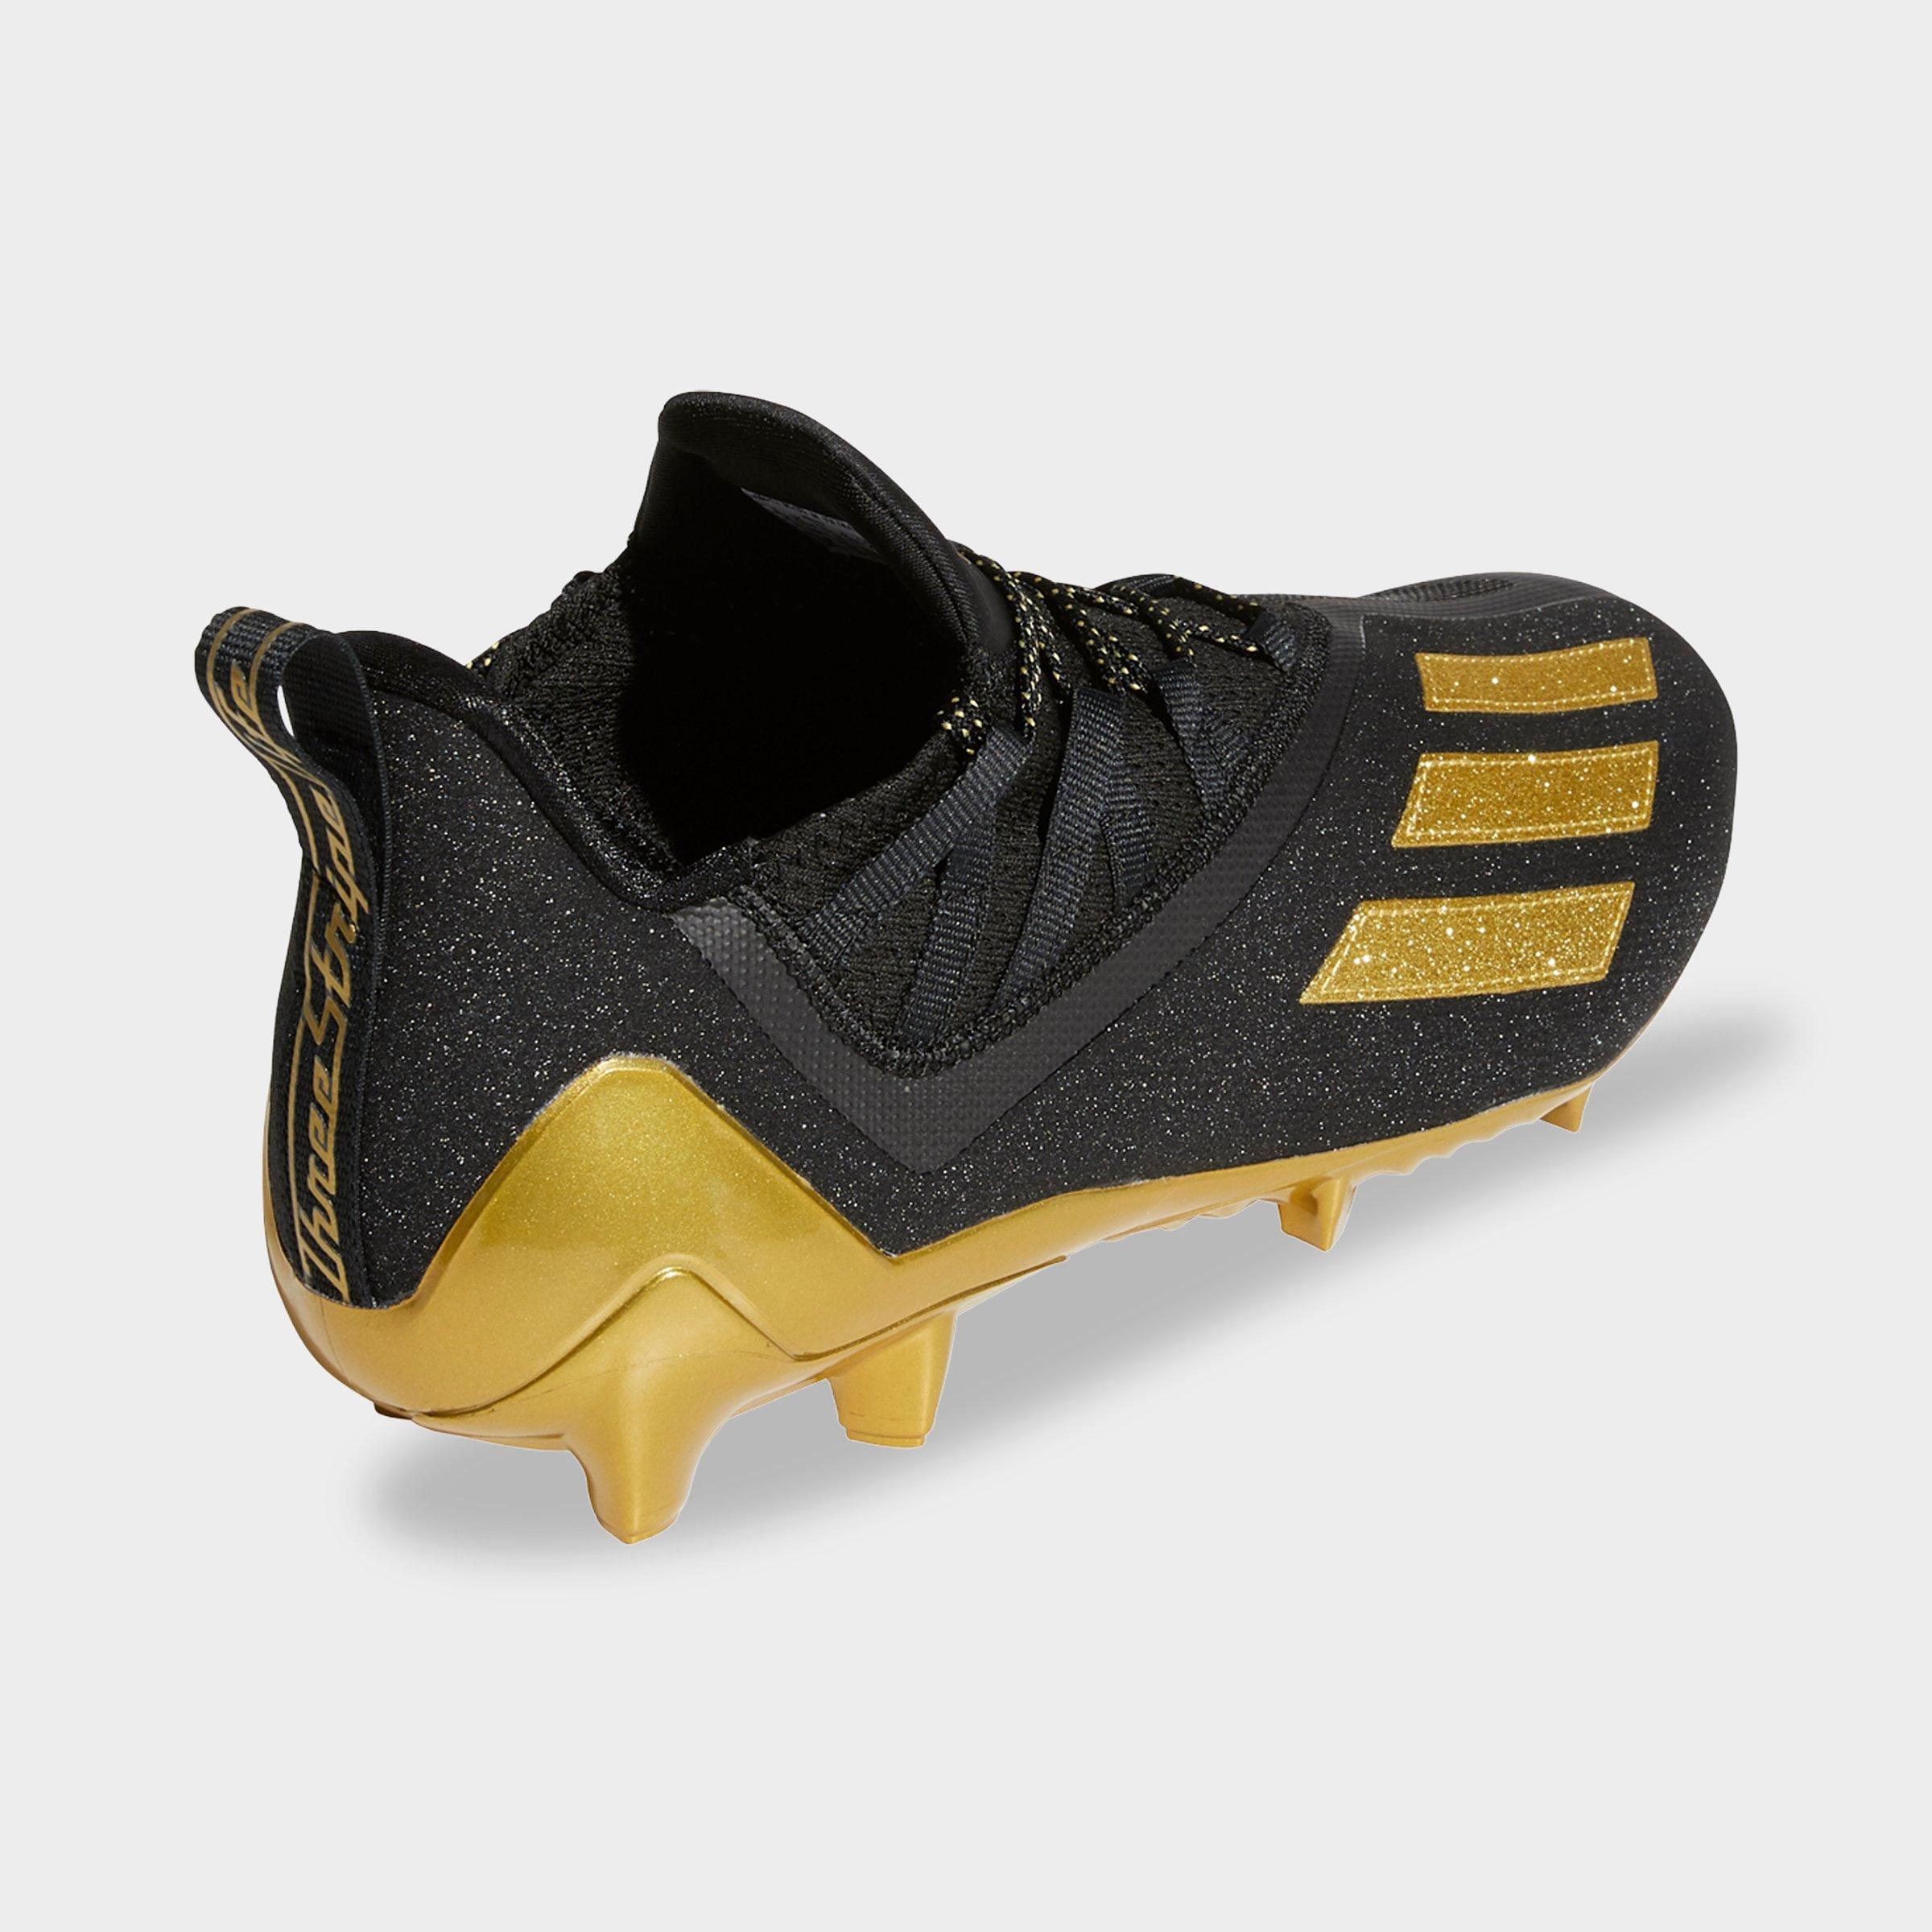 football cleats gold black